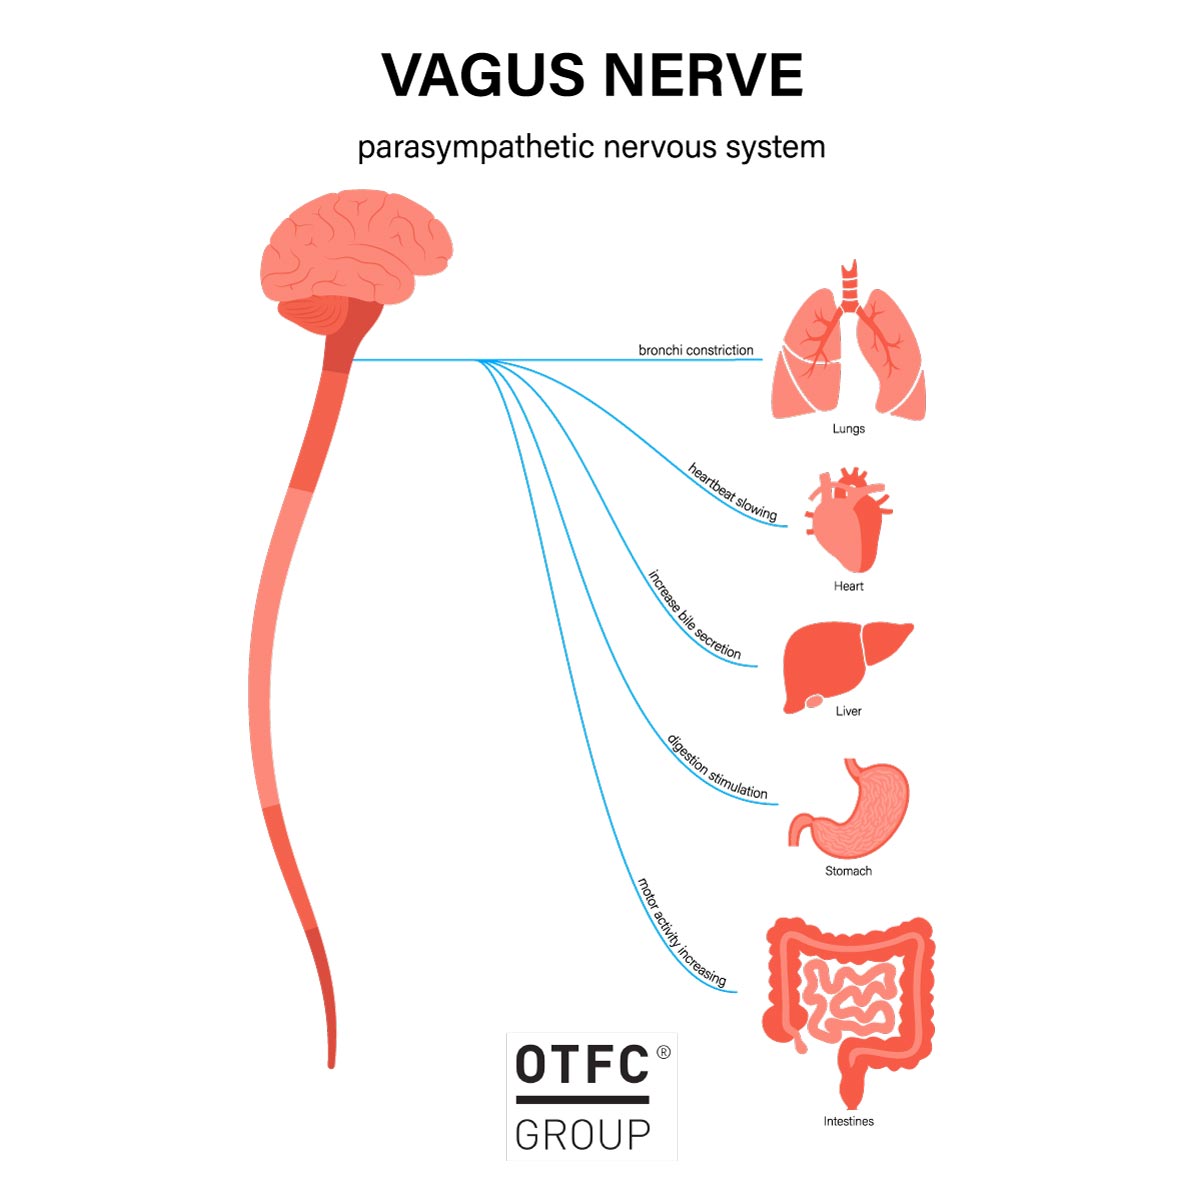 VAGUS nerve - parasympathetic nervous system